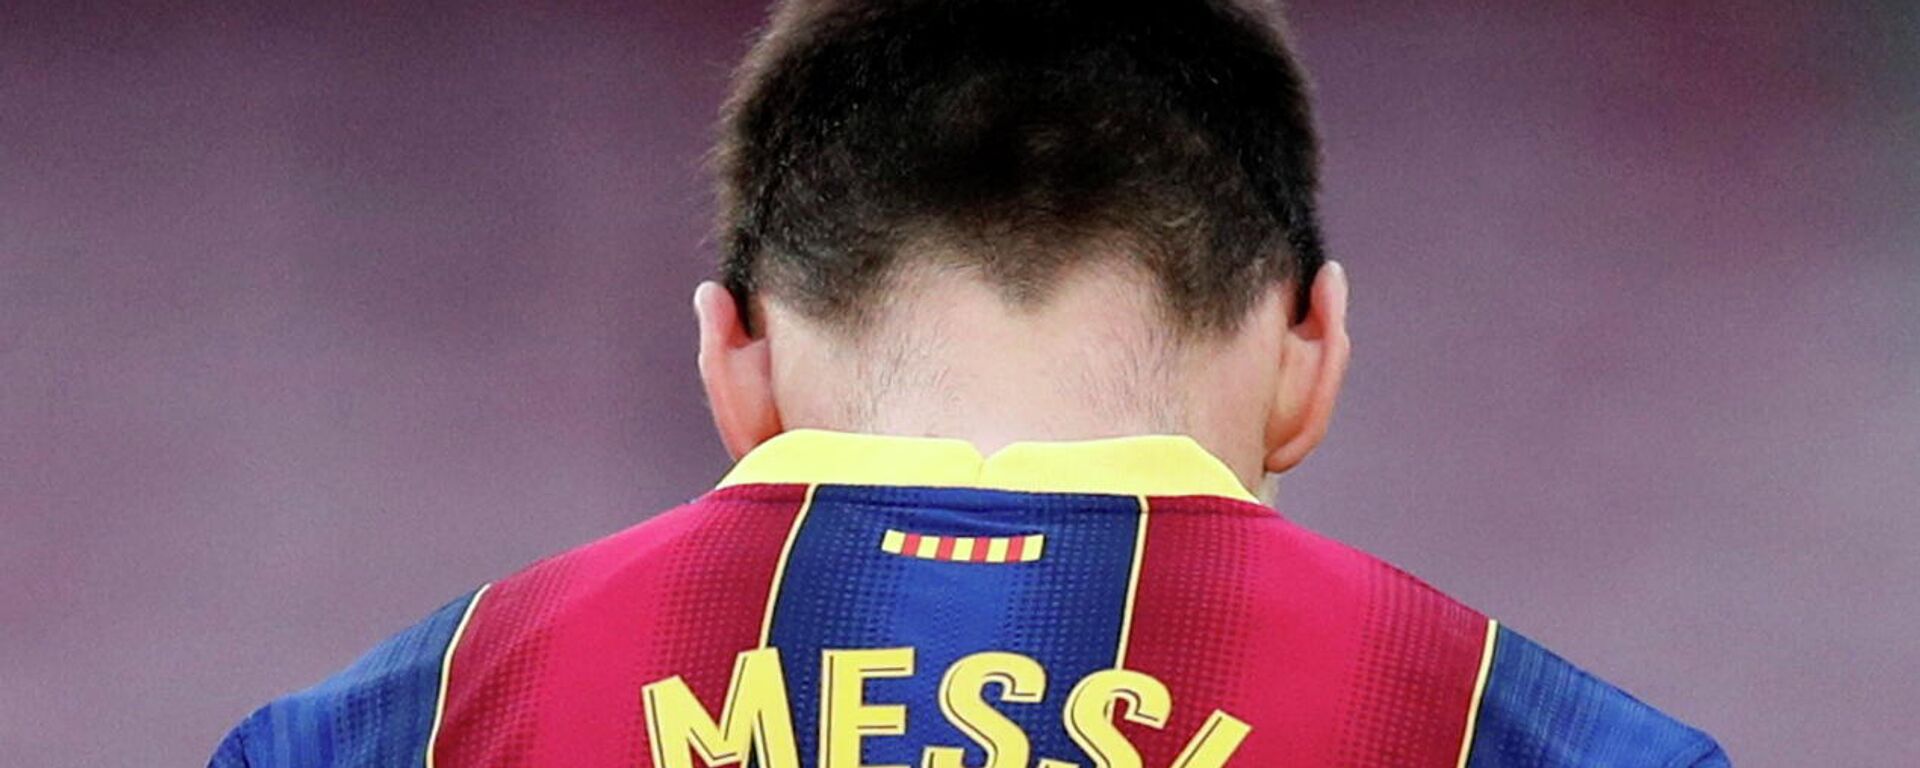 Lionel Messi, futbolista argentino exjugador del Fútbol Club Barcelona - Sputnik Mundo, 1920, 06.08.2021